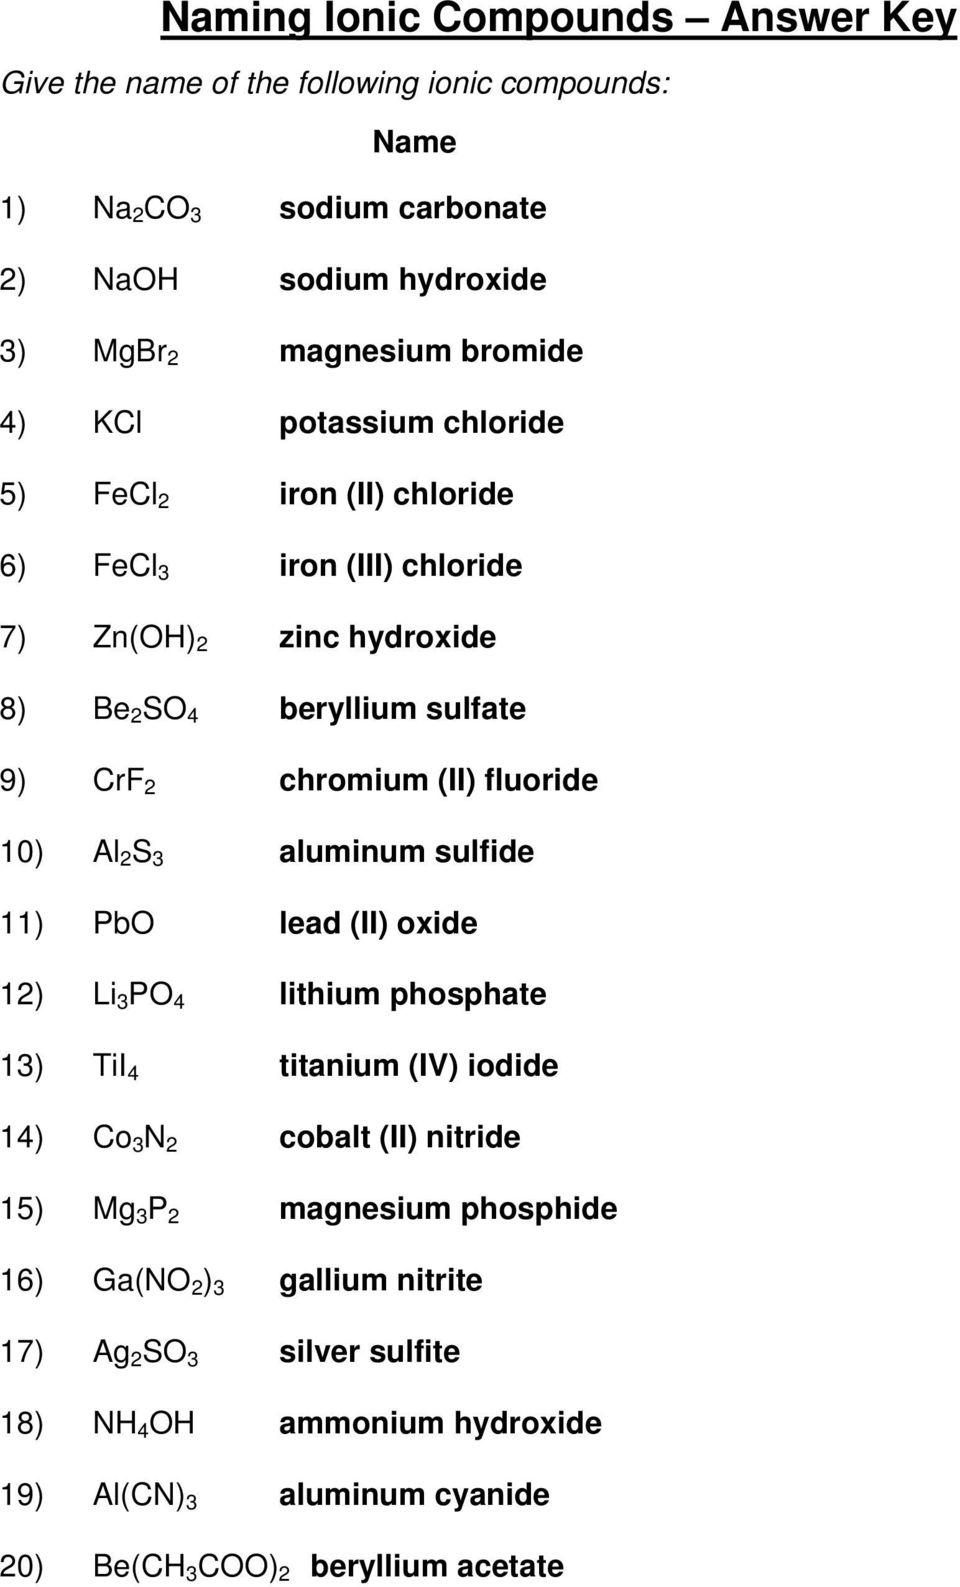 Naming Ionic Compounds Answer Key - PDF Free Download Inside Naming Ionic Compounds Worksheet Answers